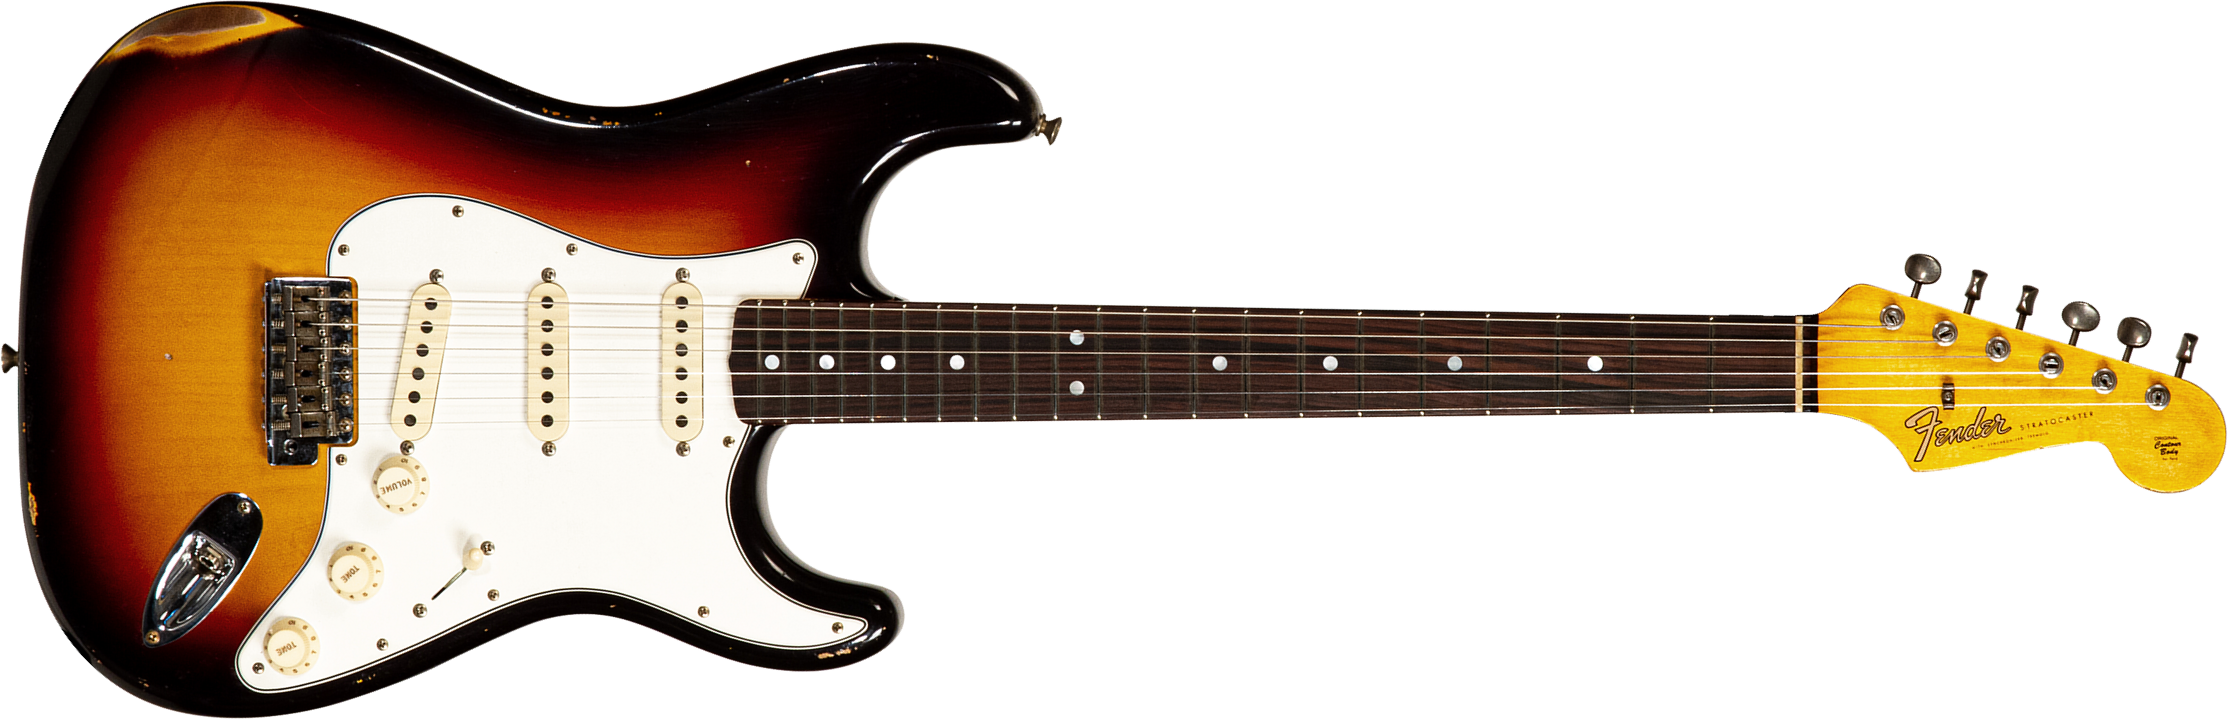 Fender Custom Shop Strat Late 64 3s Trem Rw #cz568169 - Relic Target 3-color Sunburst - E-Gitarre in Str-Form - Main picture